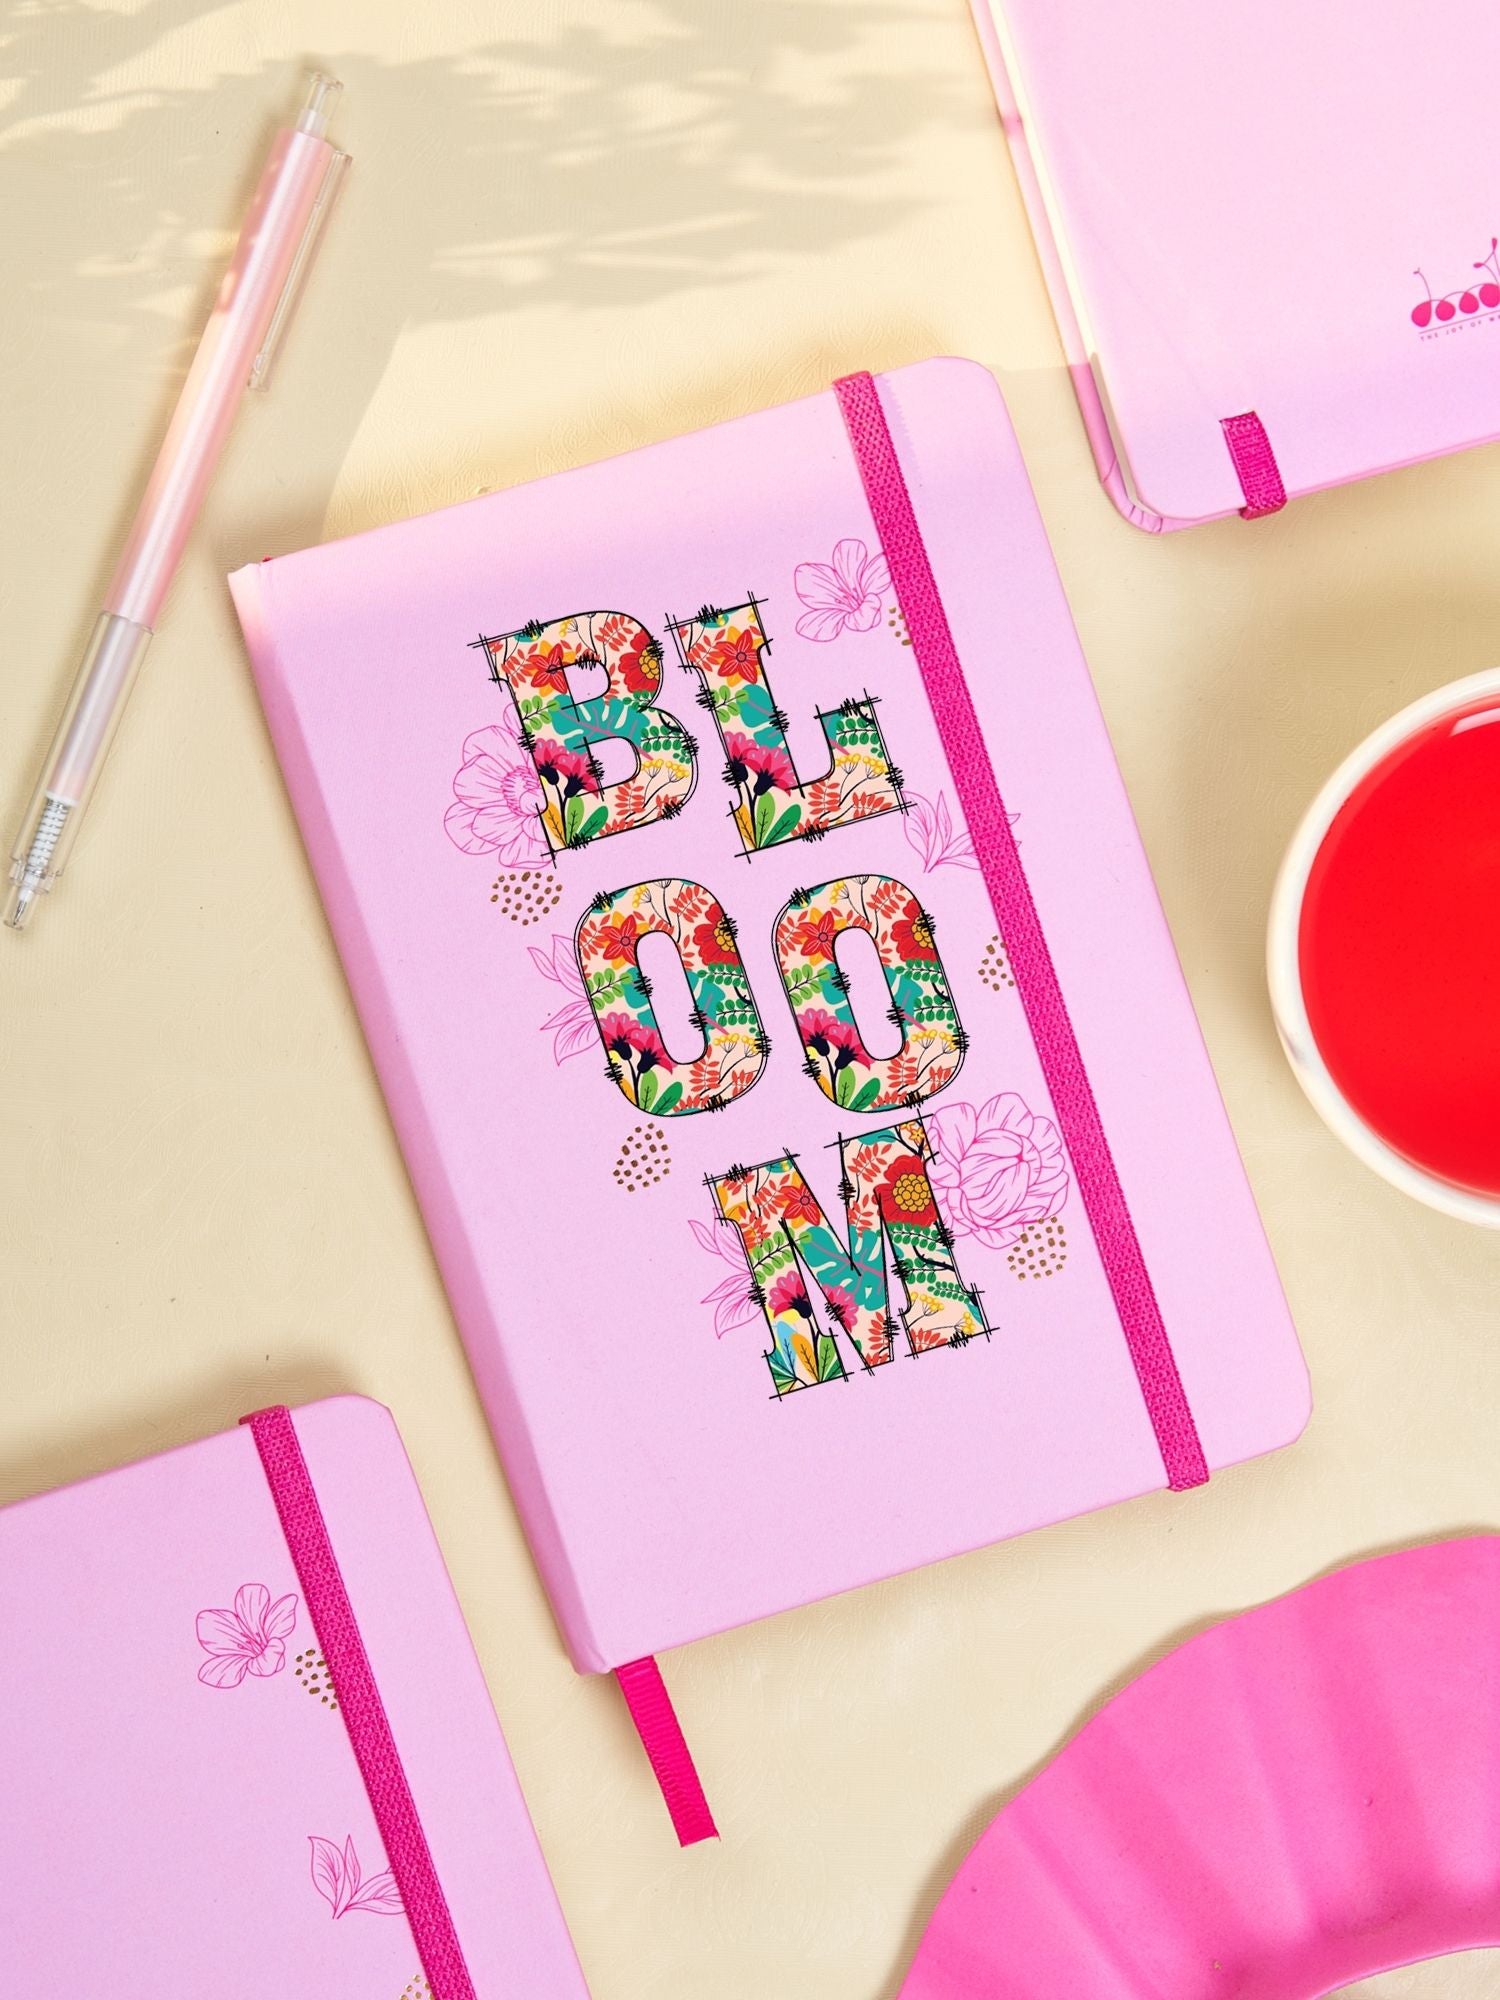 DOODLE Camellia Hardbound B6 Diary Notebook - BLOOM